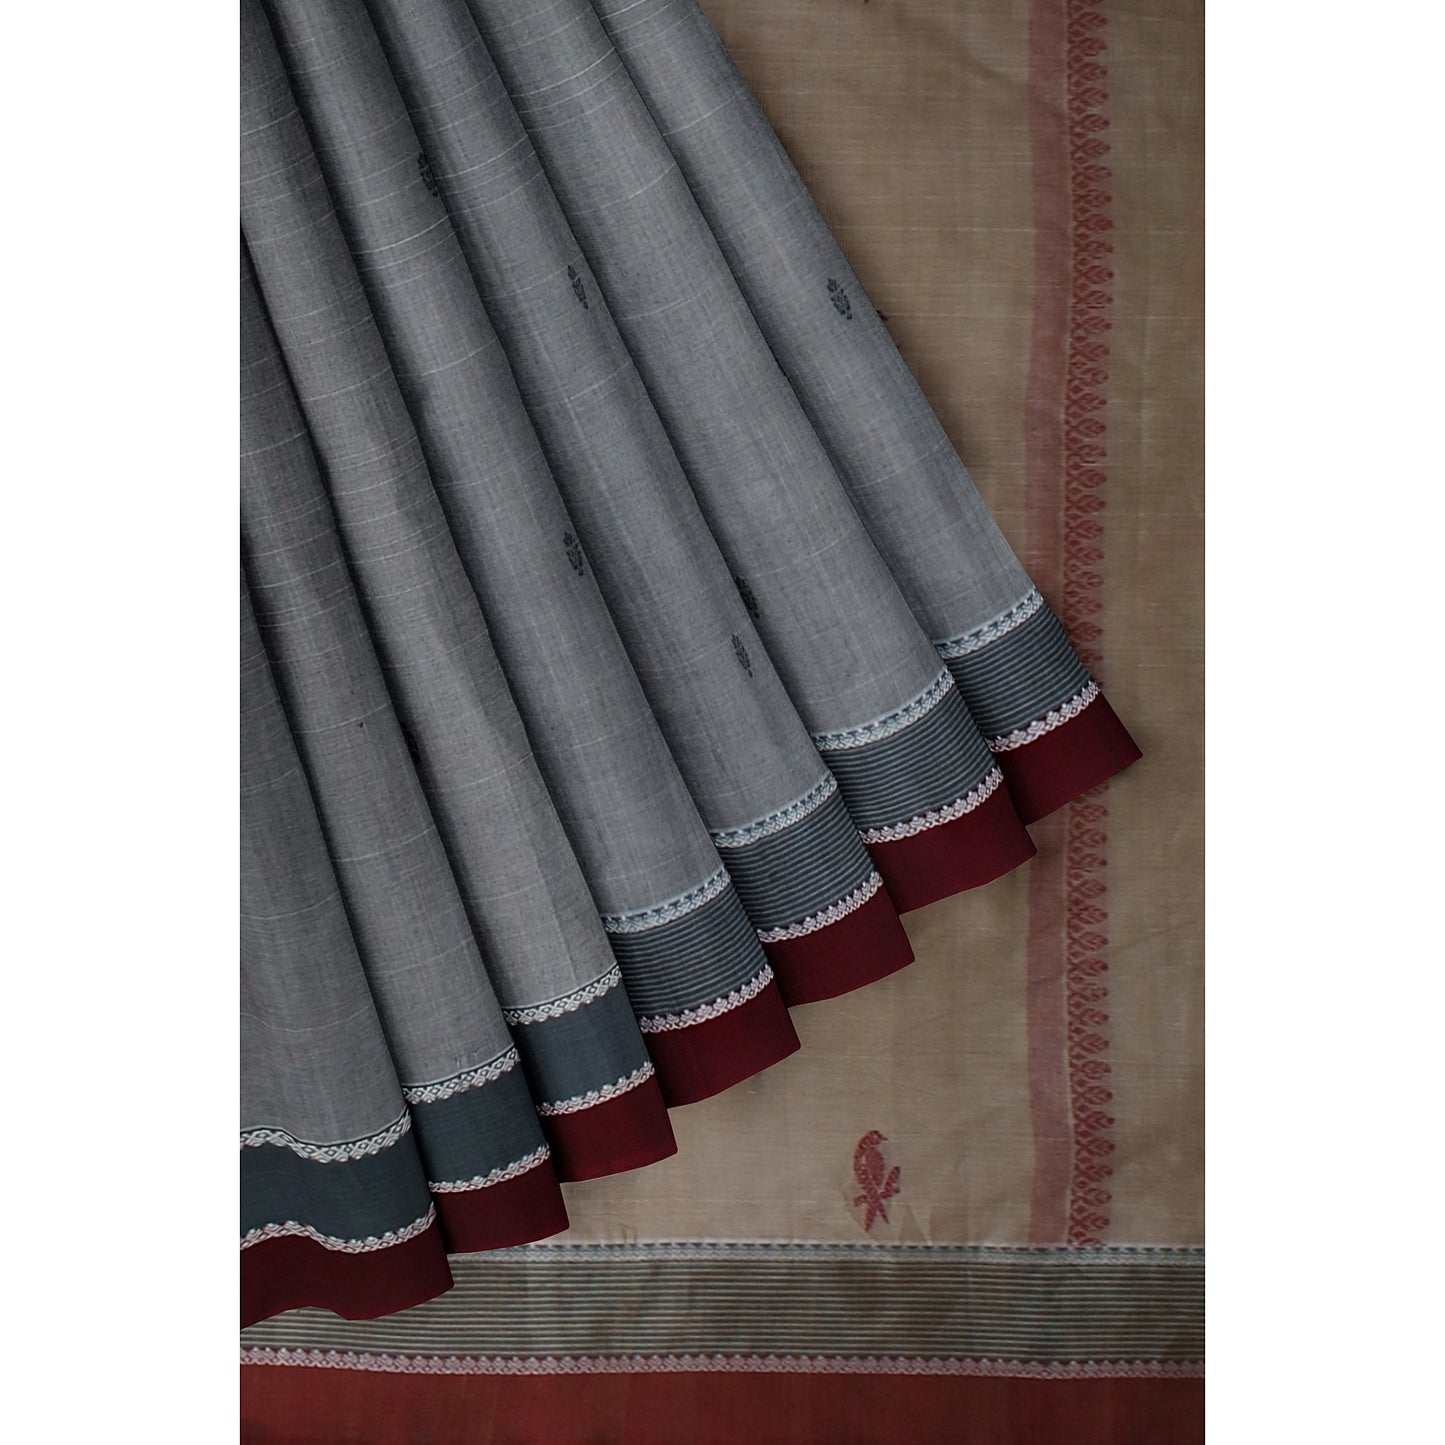 Kavya - Grey with Maroon Buta and Grey Double Border Pure Cotton Handloom Saree freeshipping - Shreni Samudaya